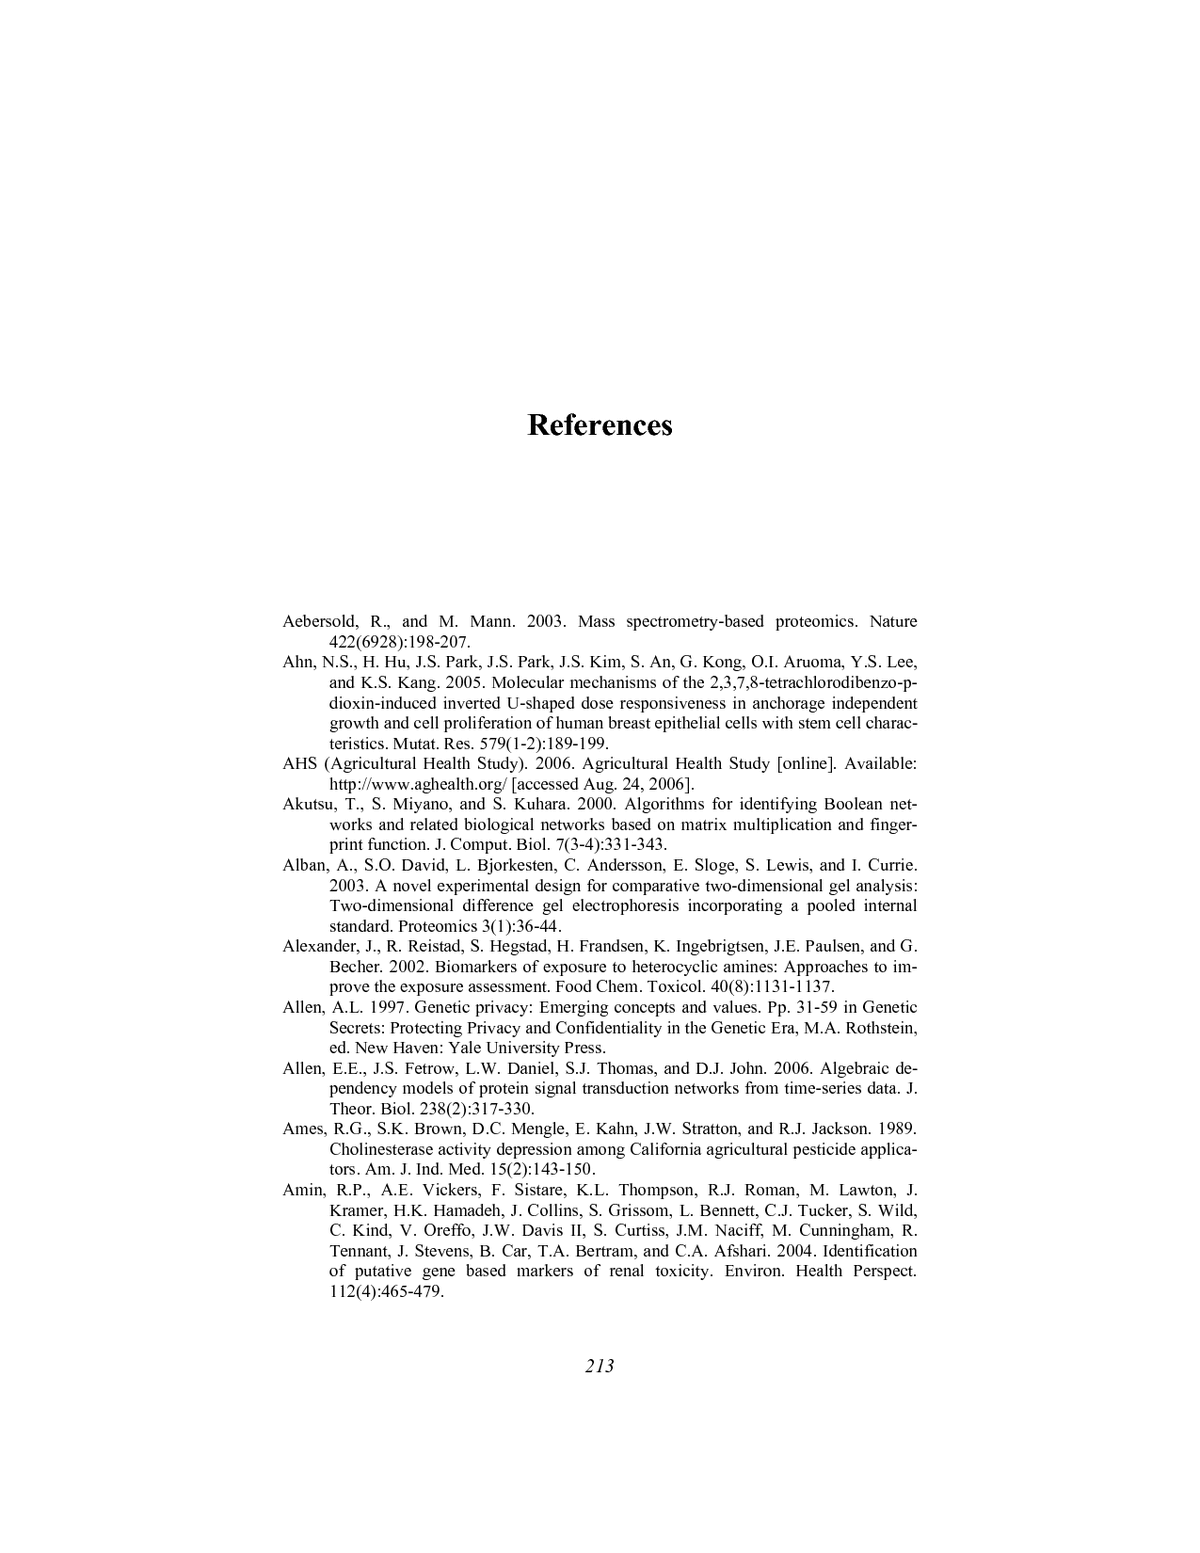 Hollander interchange manual pdf download free for windows 10